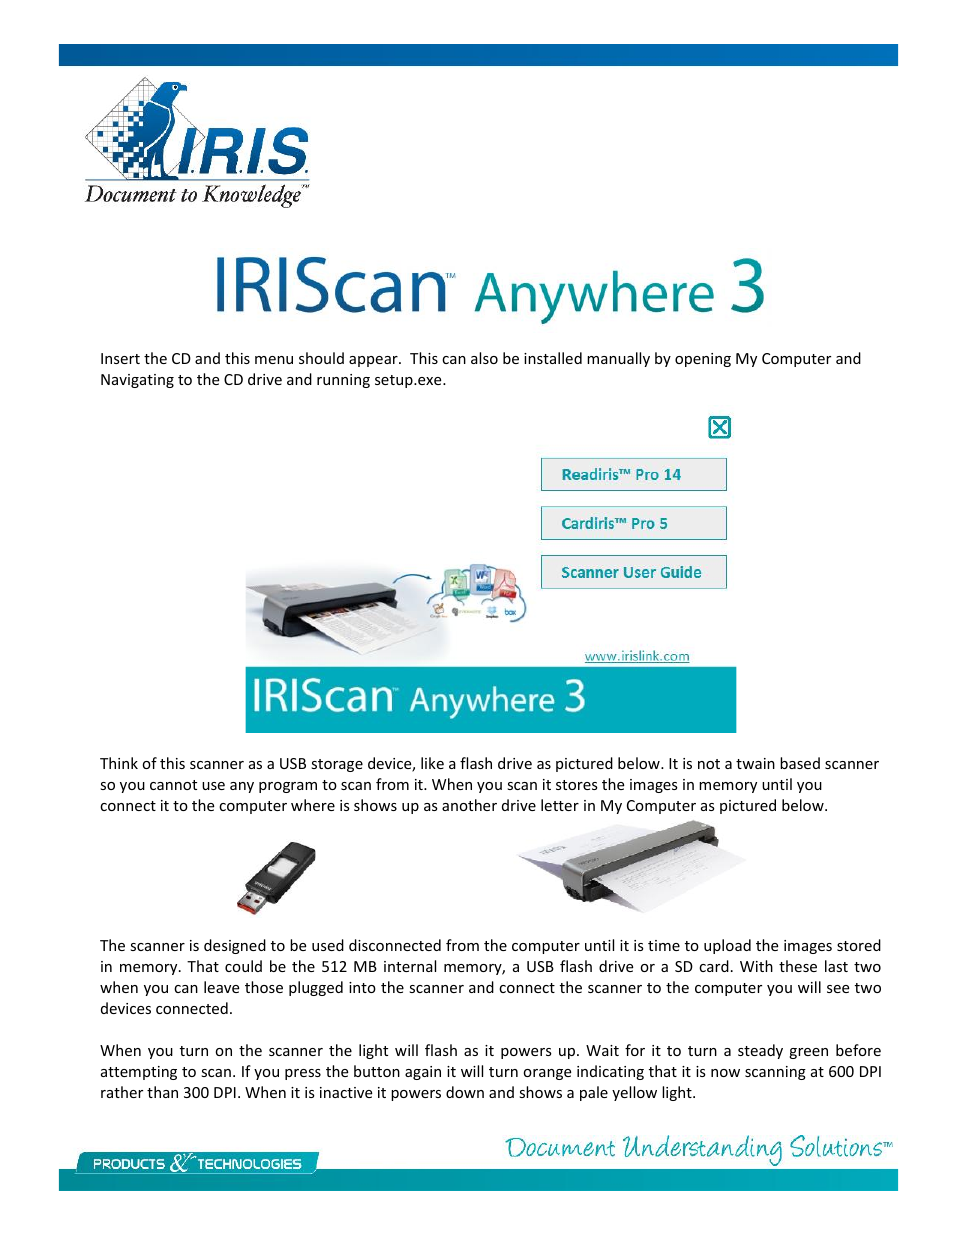 IRIScan Anywhere 3 for Windows